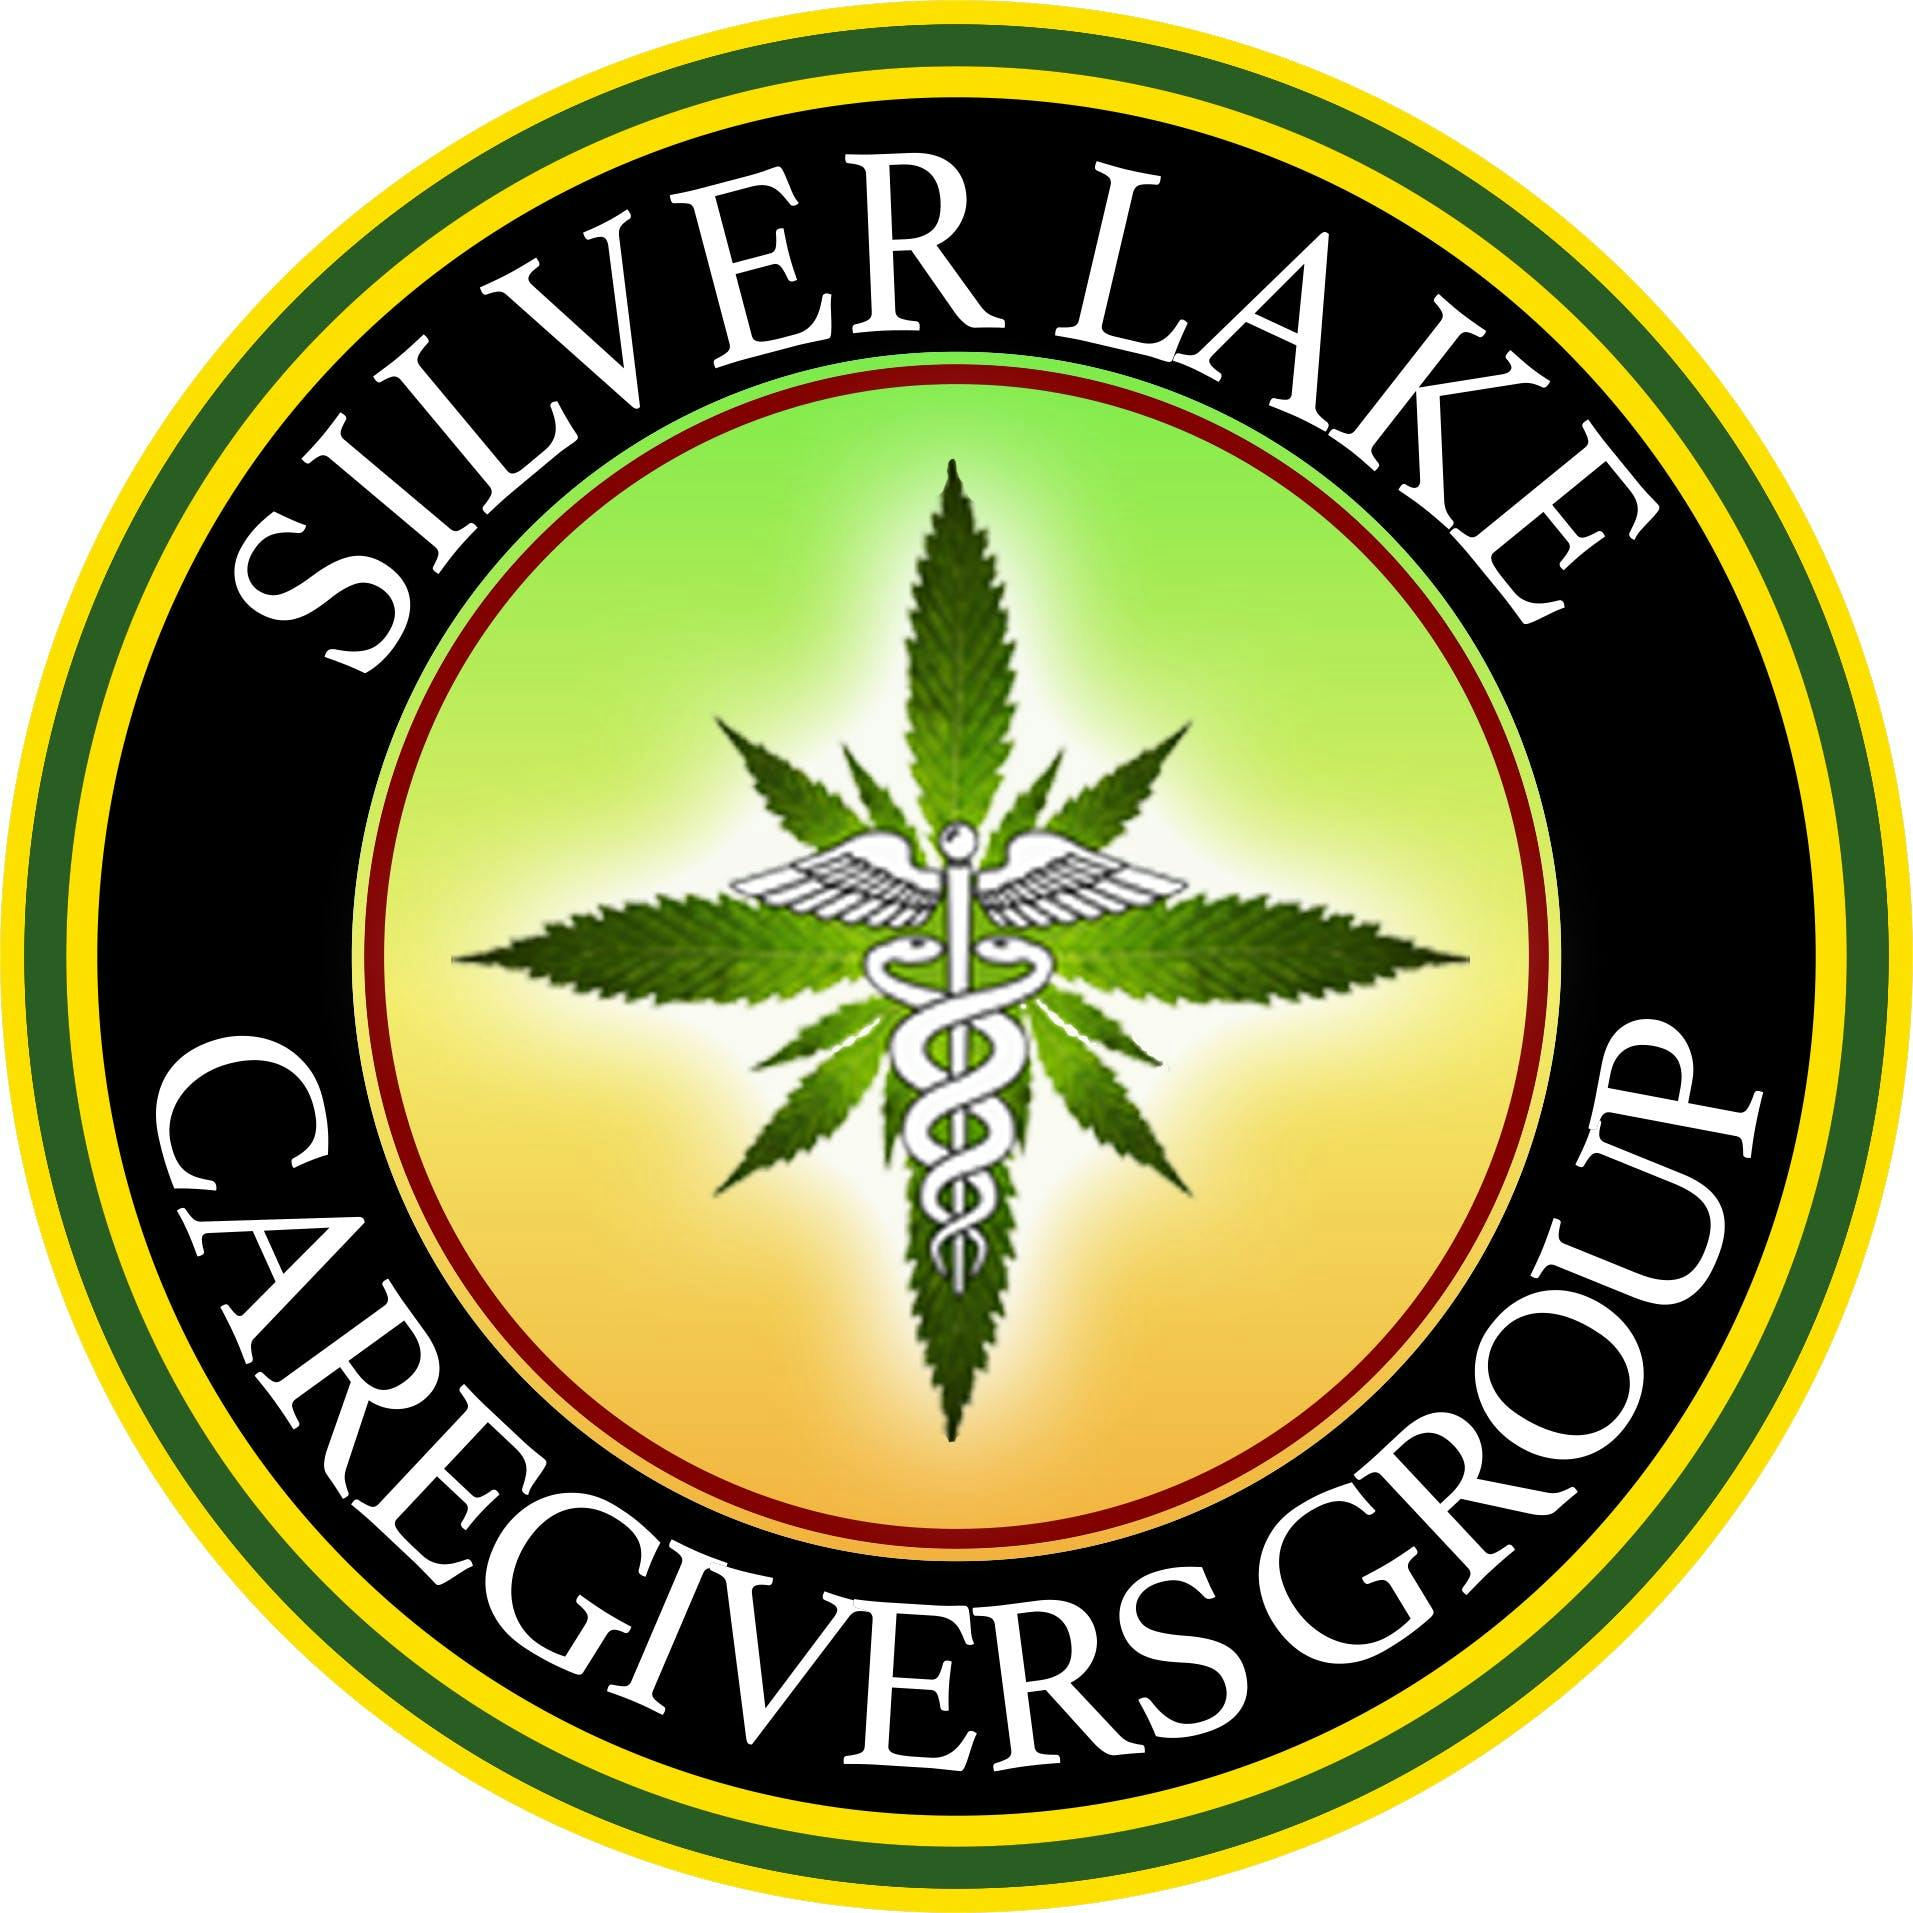 Silver Lake Caregivers Group